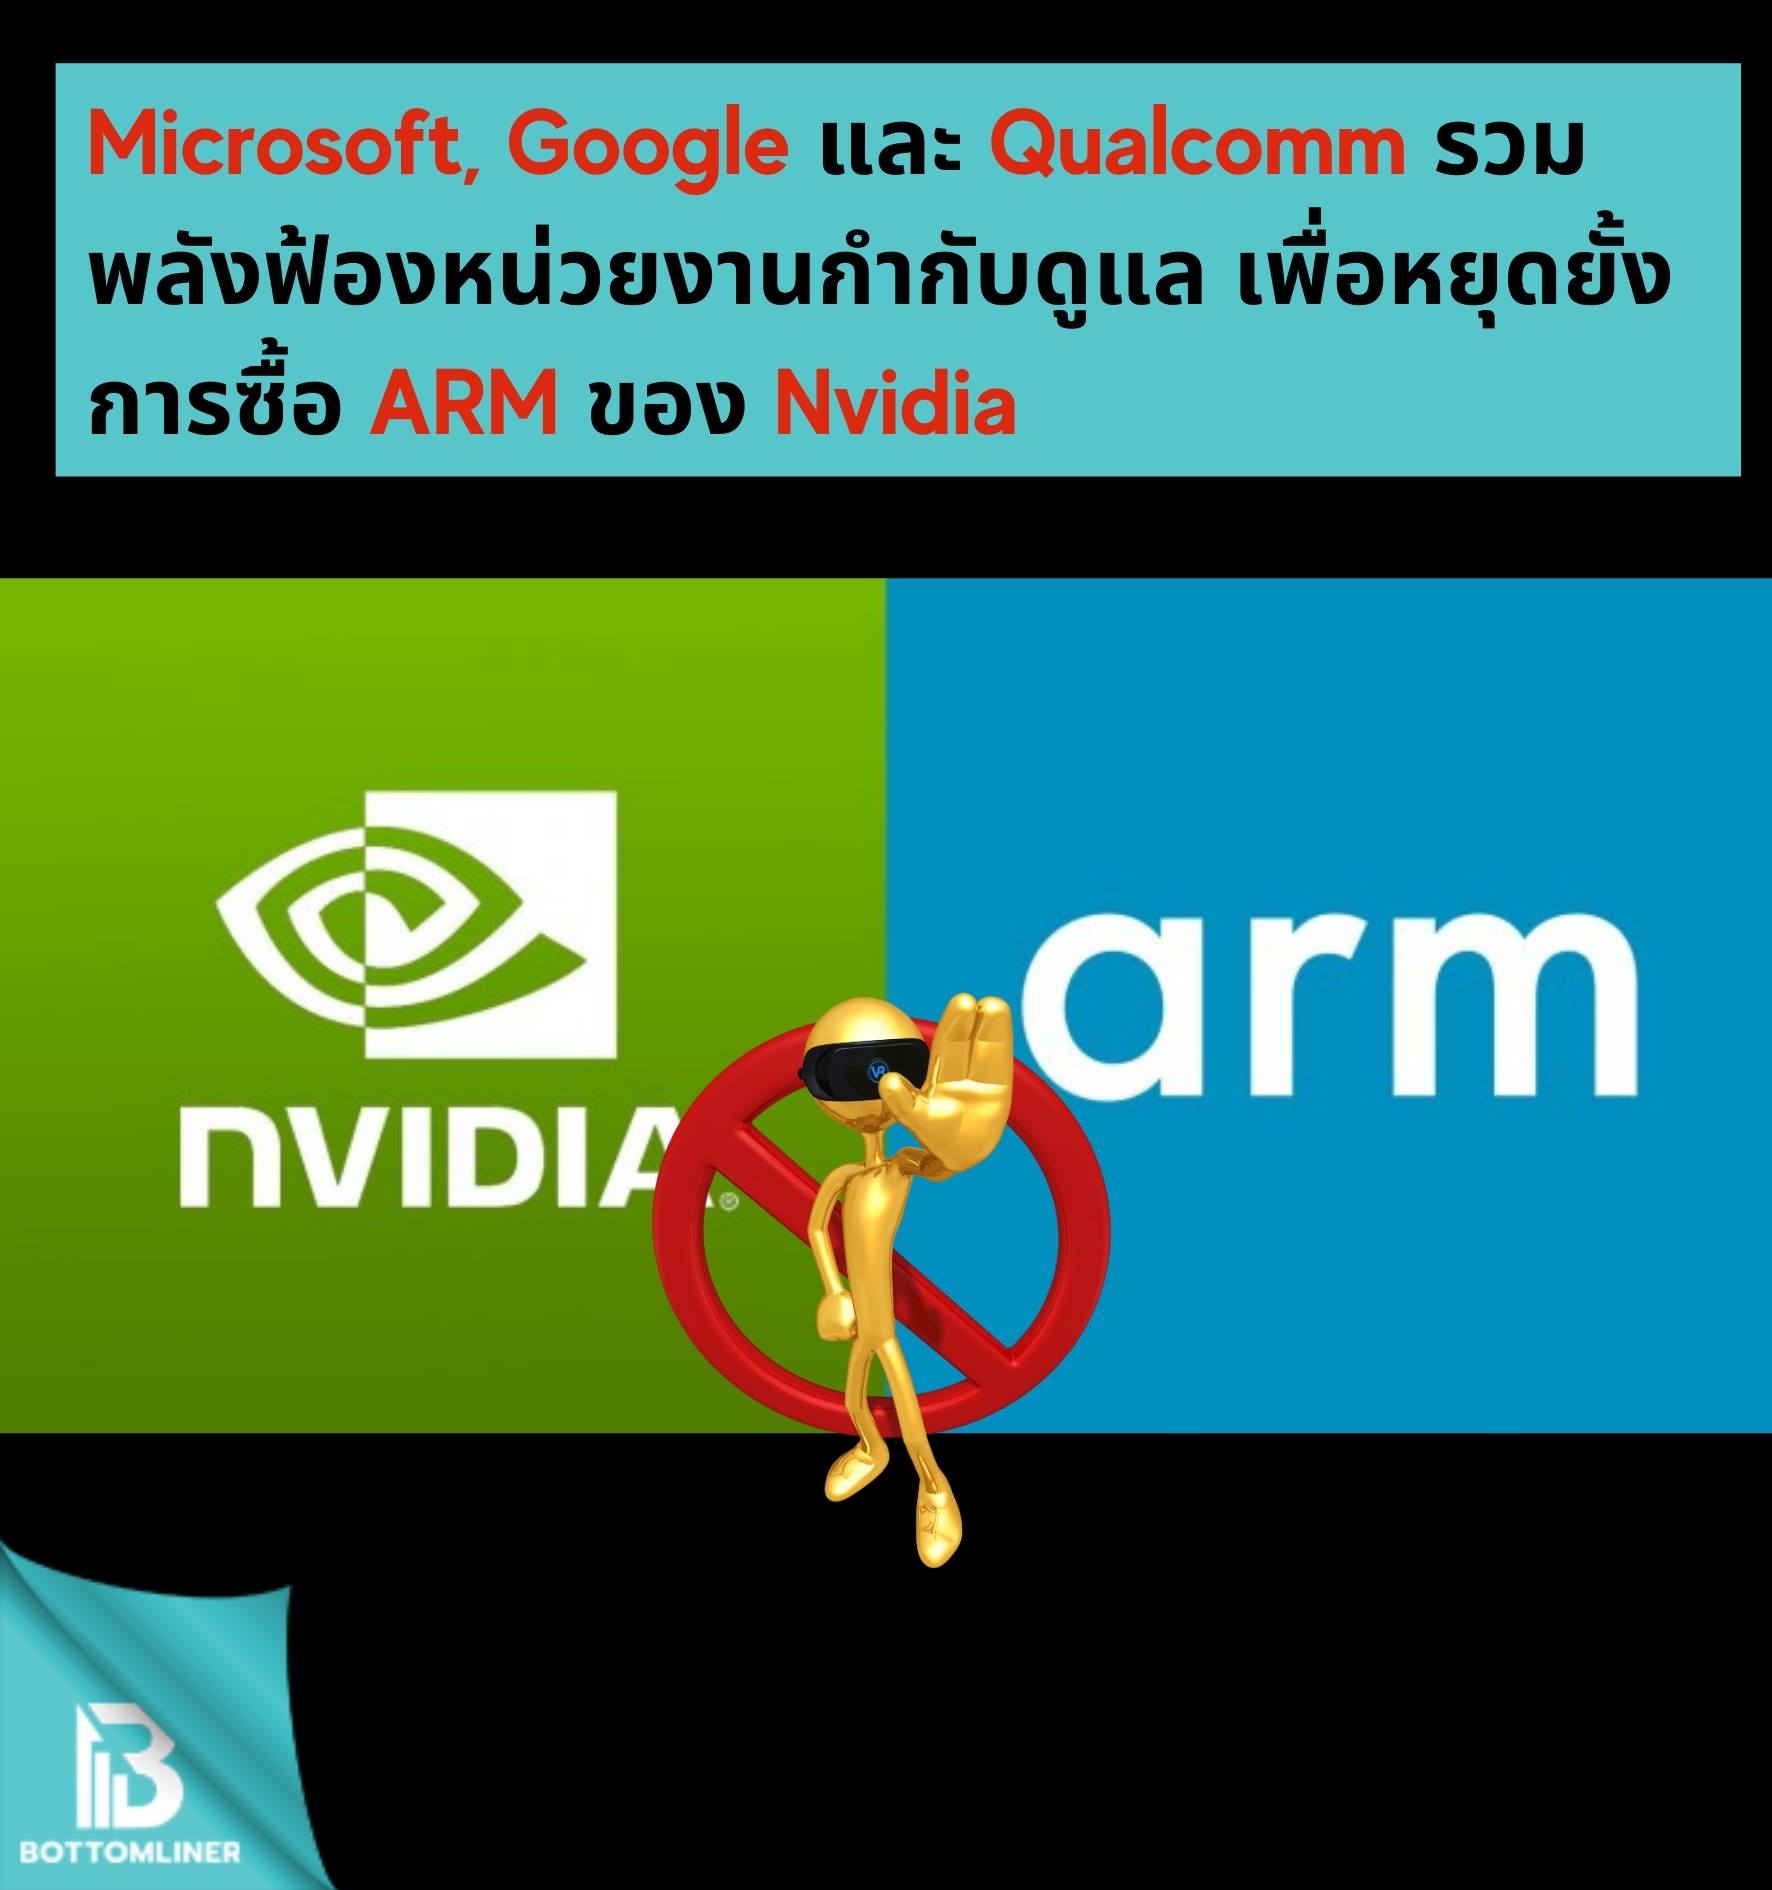 Microsoft, Google, Qualcomm รวมพลังฟ้องหน่วยงานกำกับดูแล เพื่อหยุดยั้งการซื้อ ARM ของ Nvidia